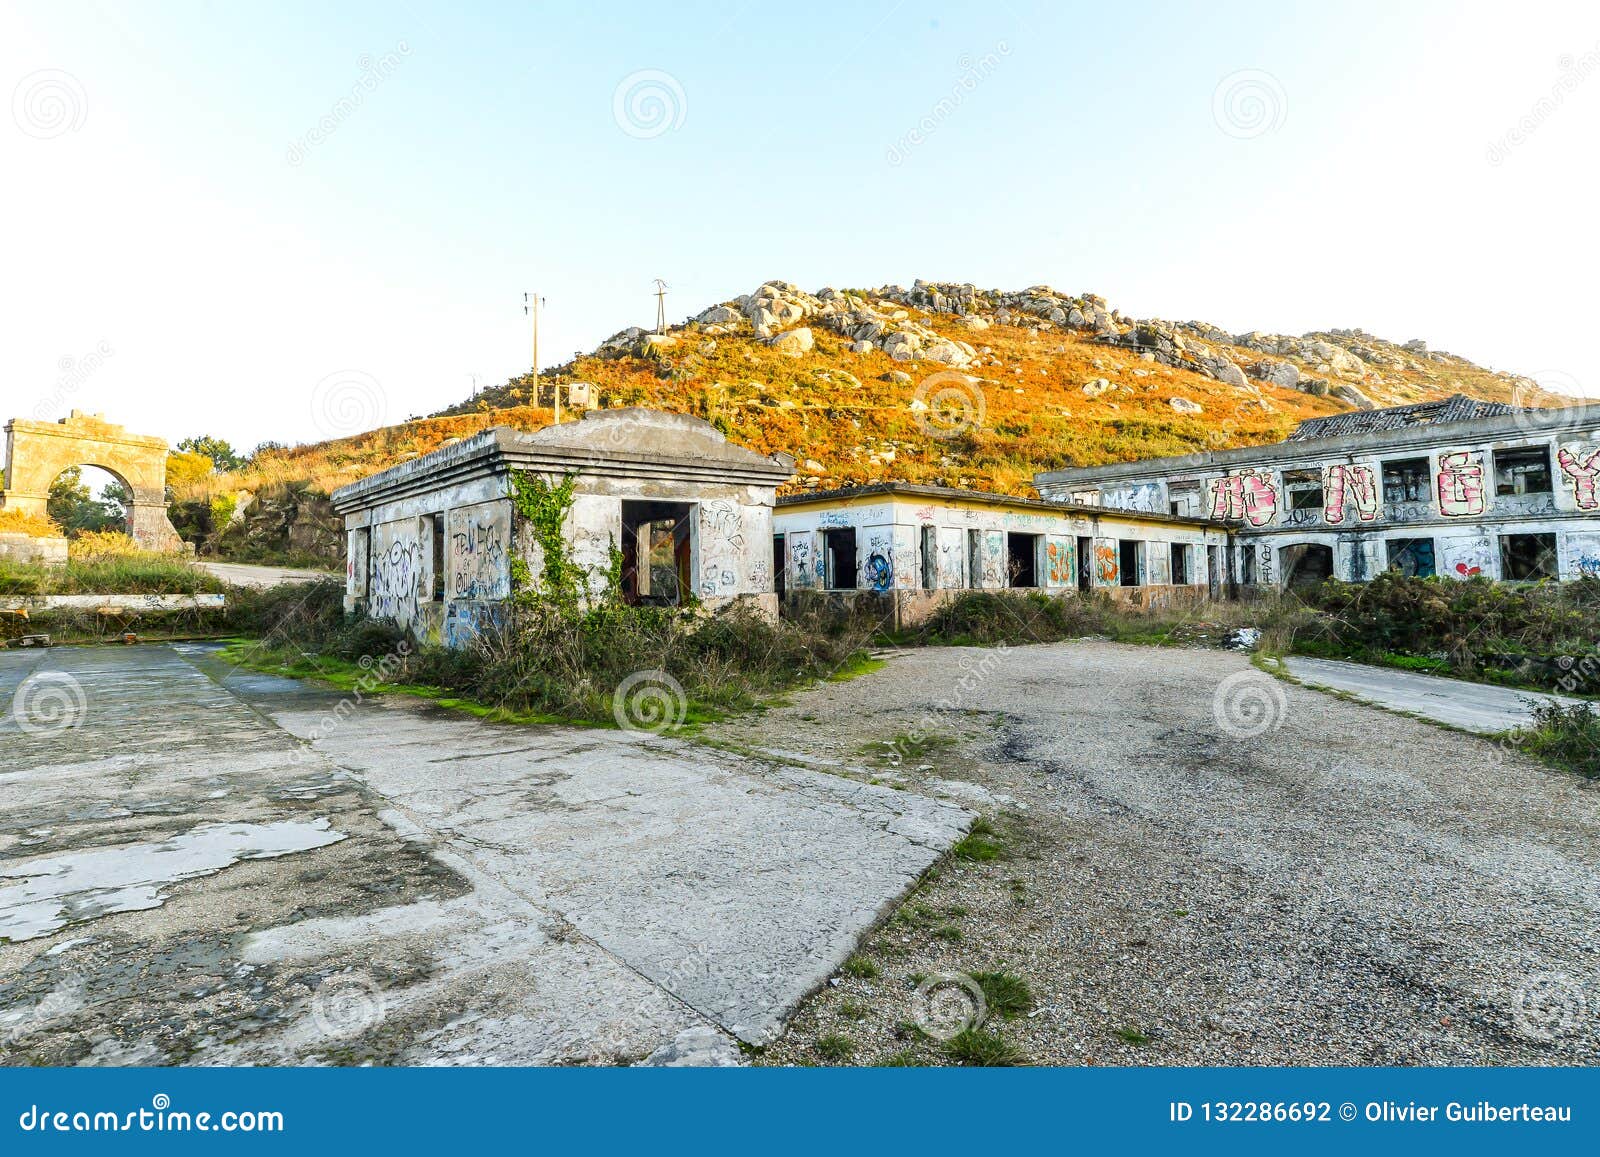 the old military base - baiona